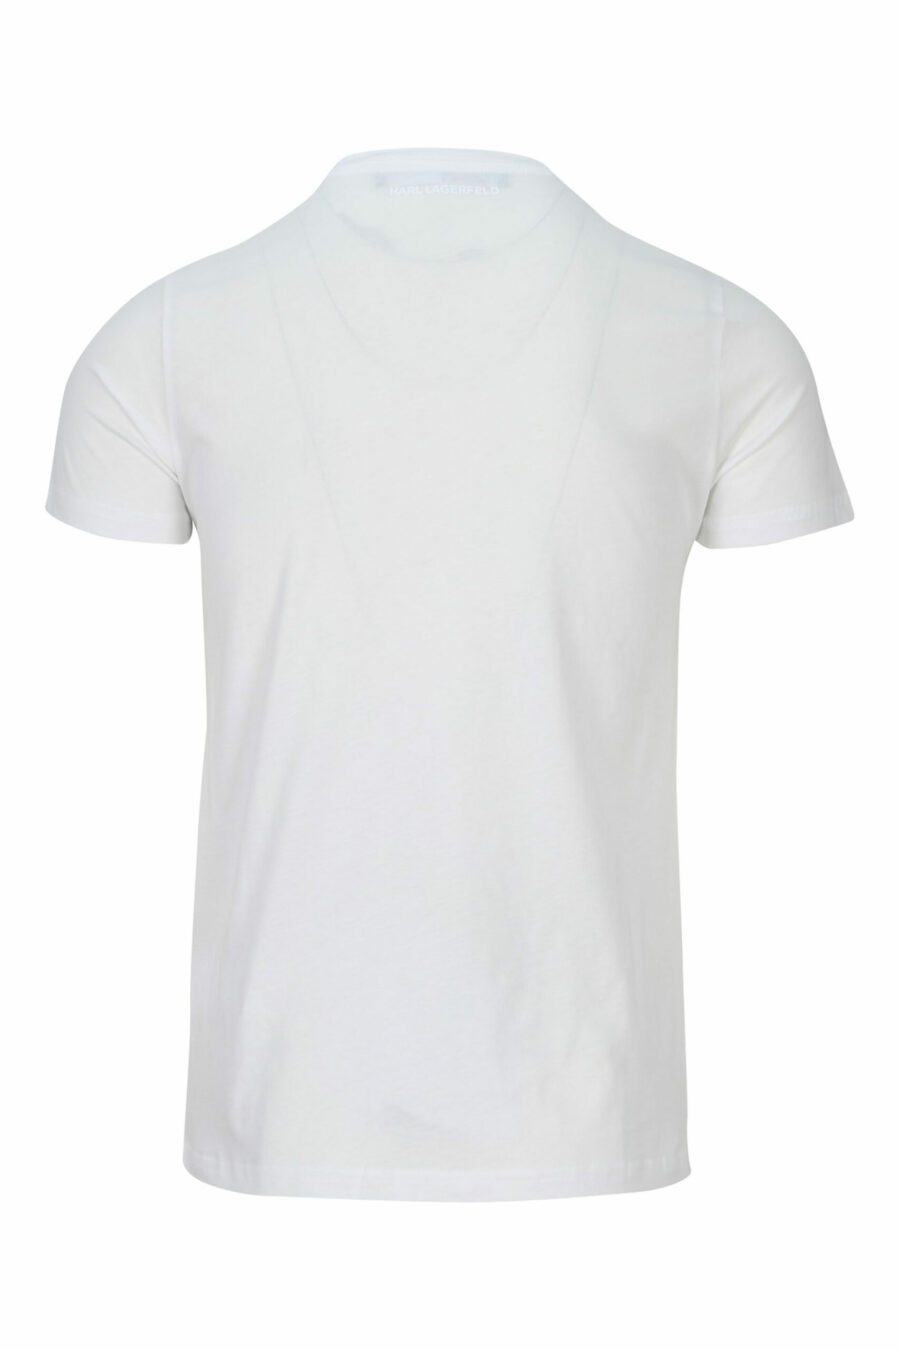 White round neck T-shirt with "karl" maxilogo - 4062225535237 1 scaled